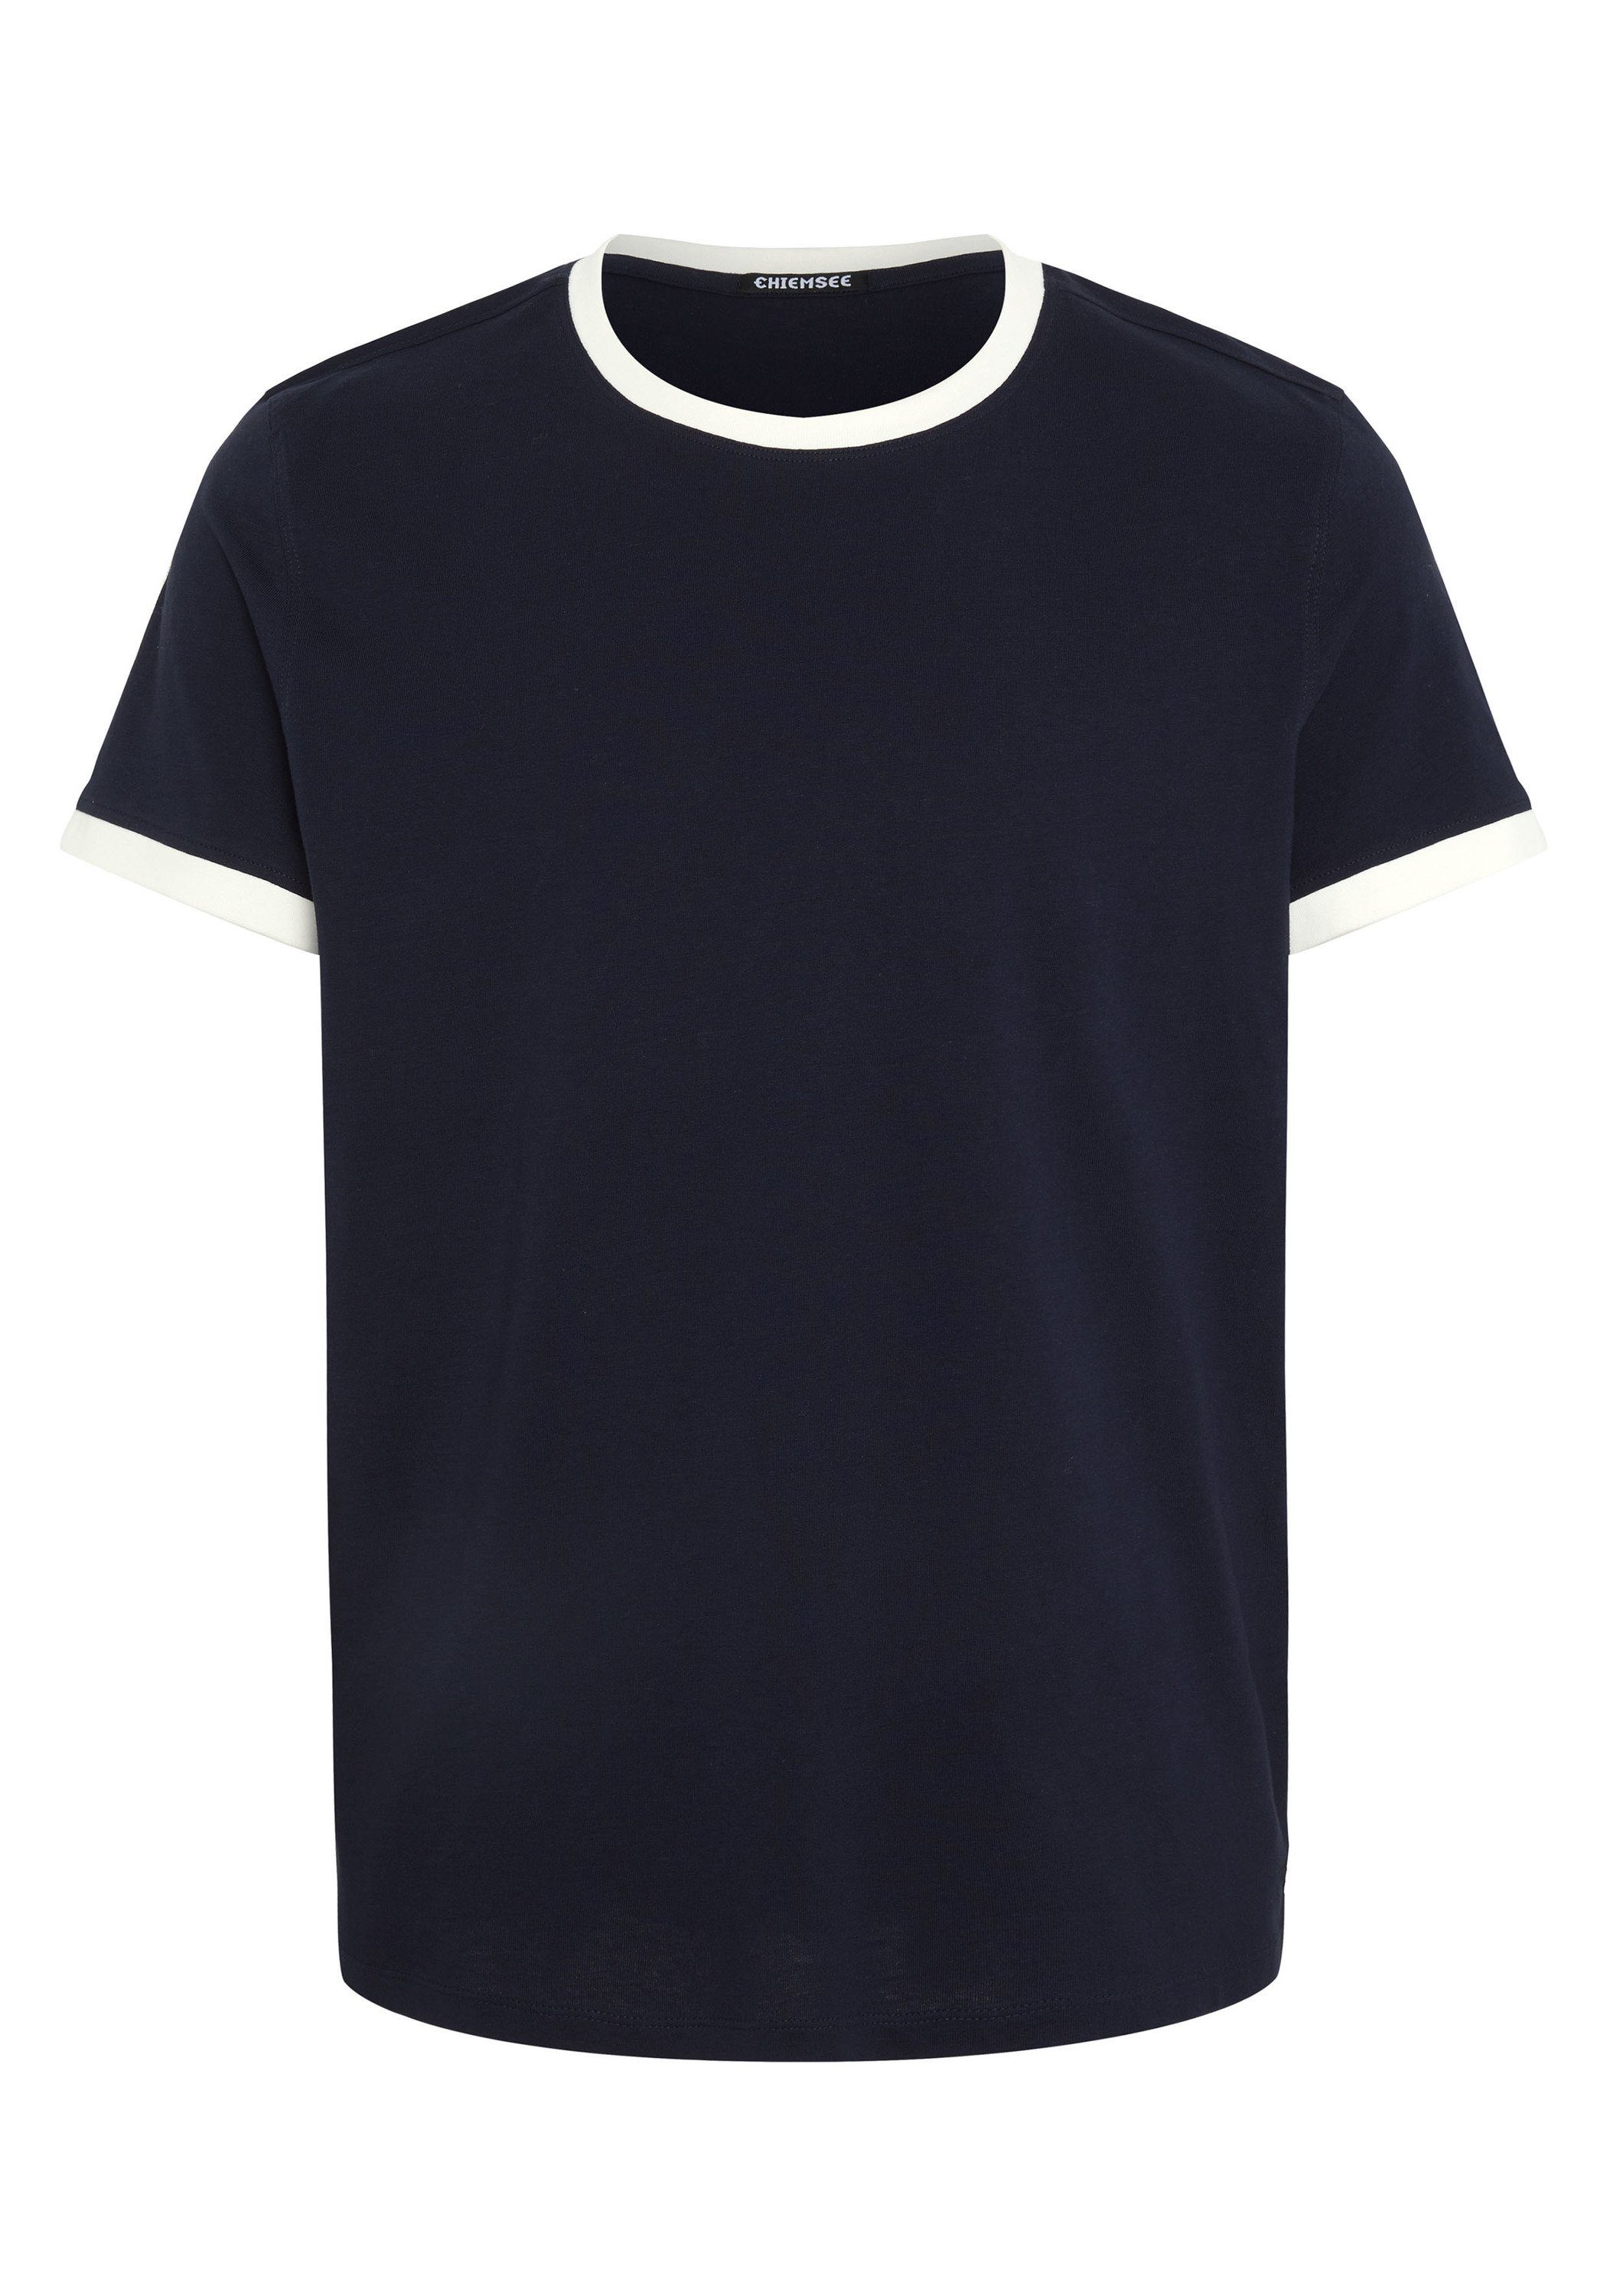 Chiemsee Print-Shirt Shirt aus Jersey mit Label-Print 1 19-3924 Night Sky